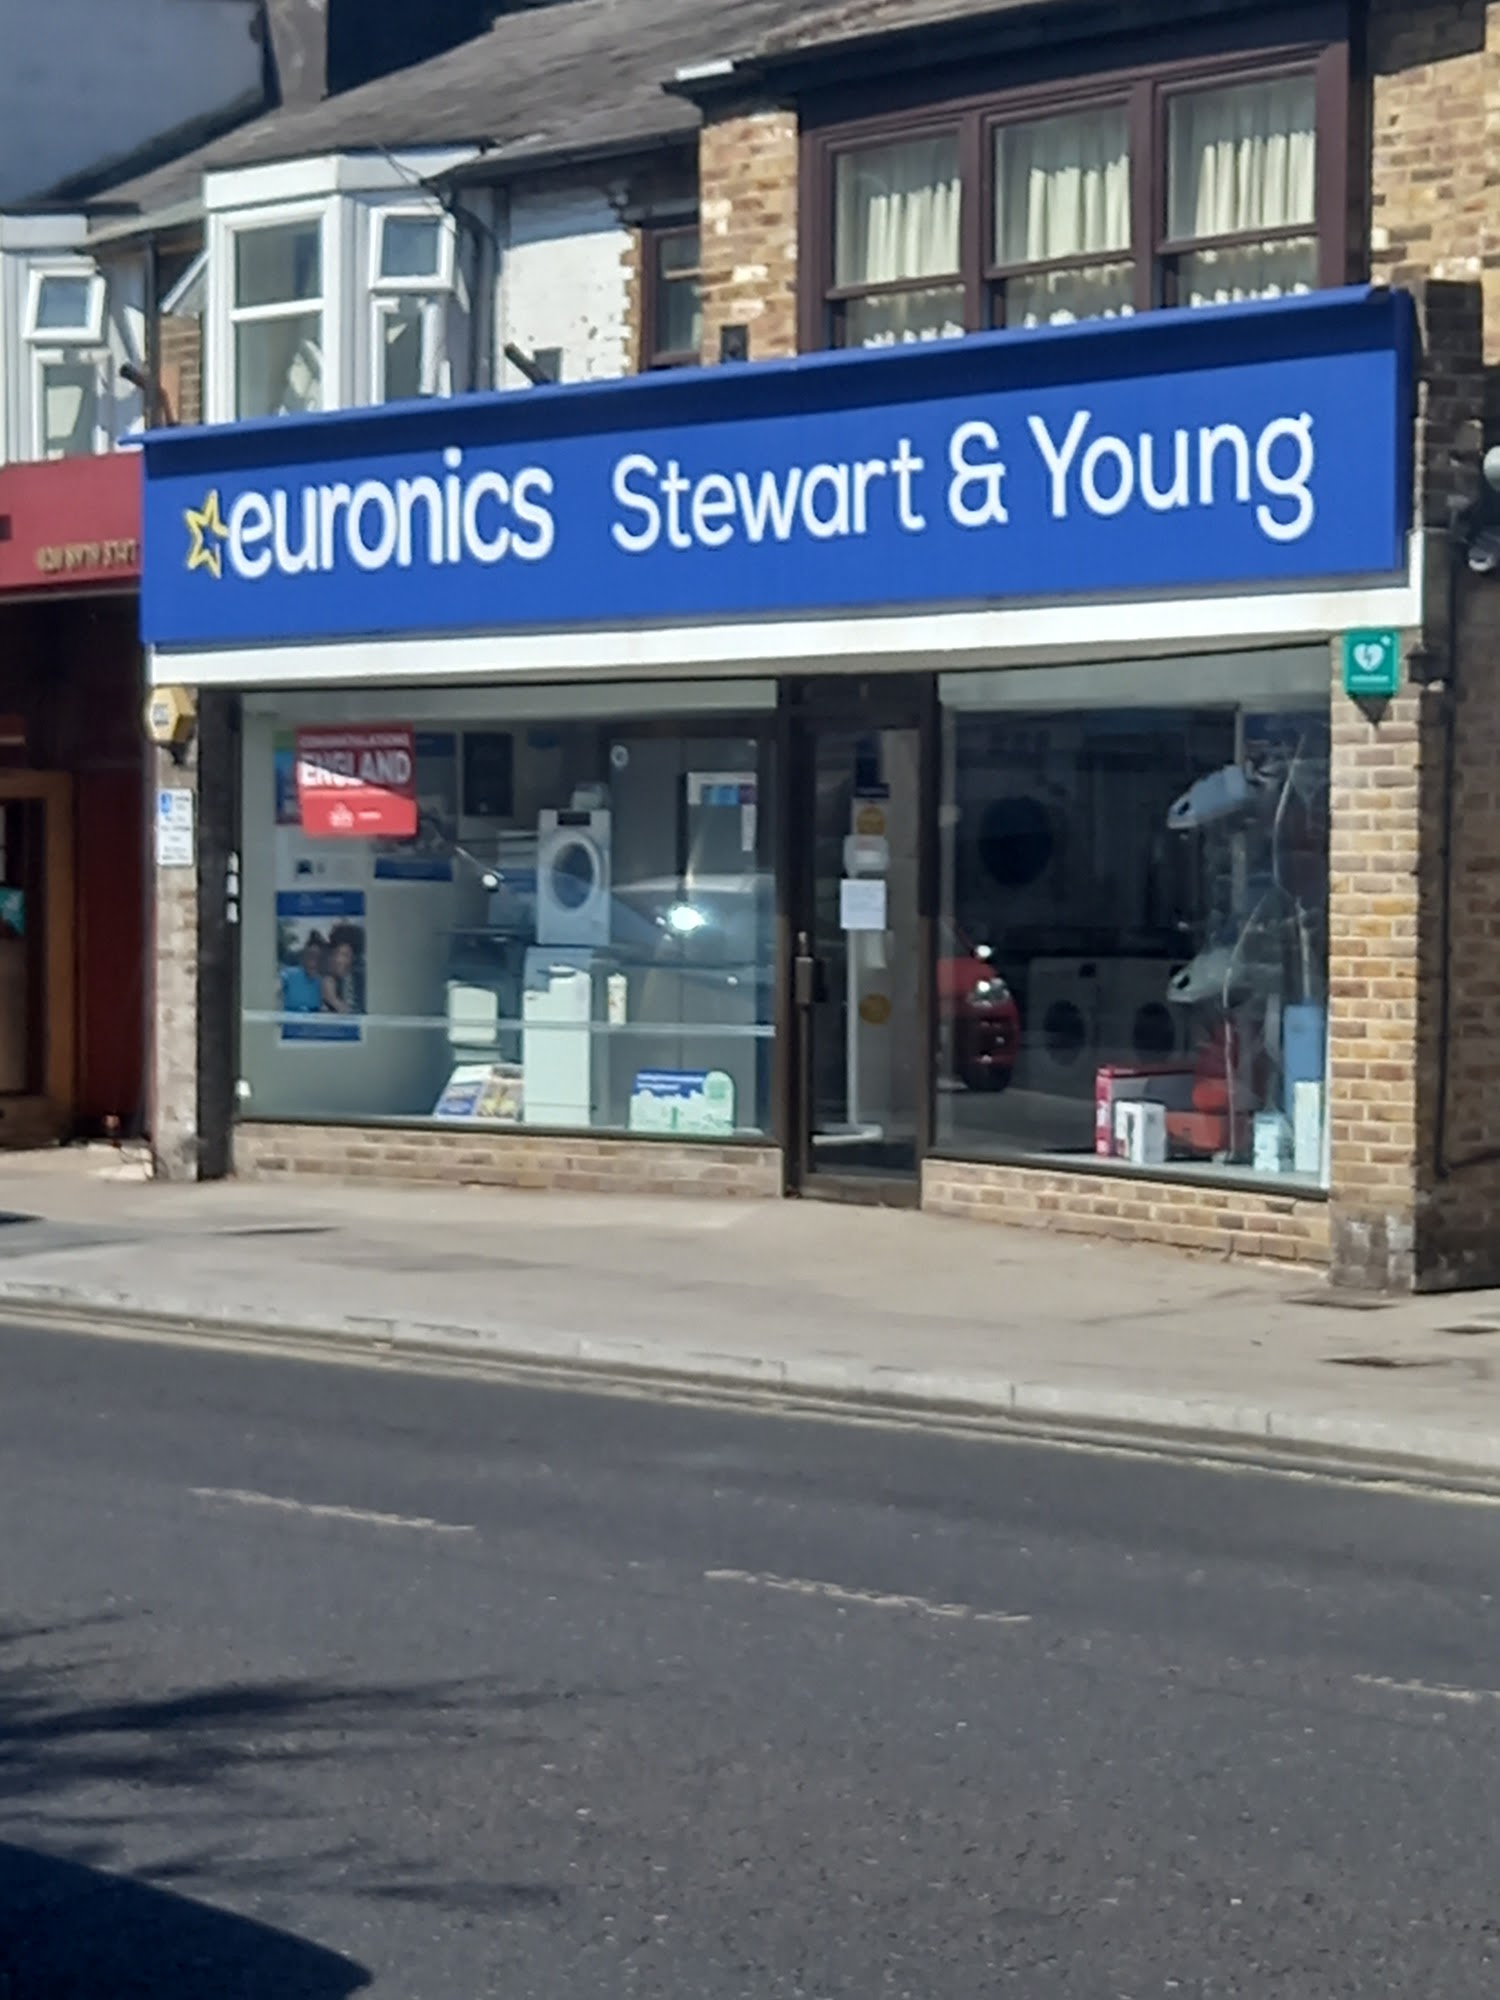 Stewart & Young, Euronics